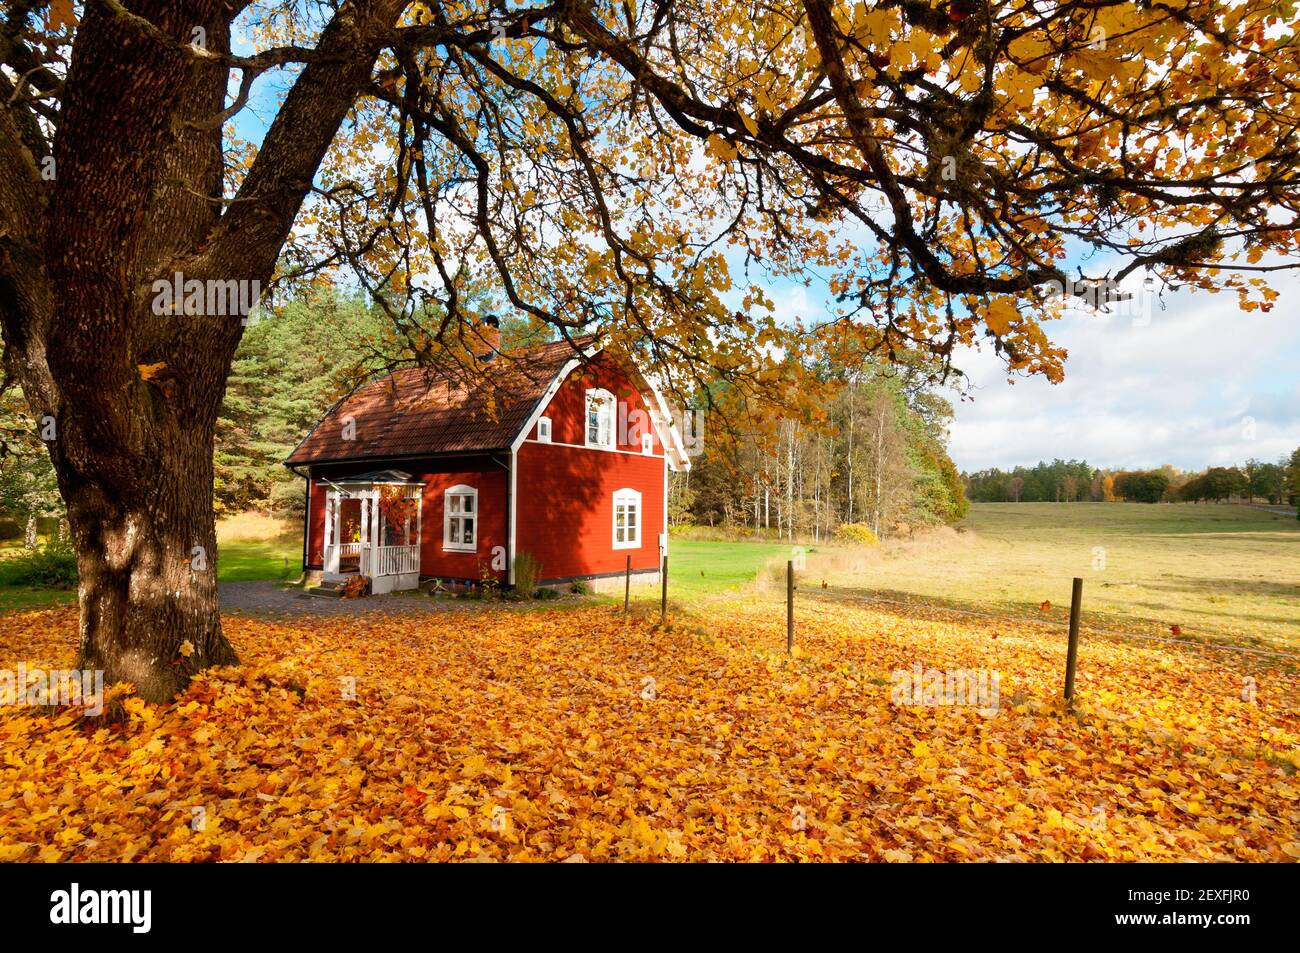 Red Swedish house amongst autumn leaves Stock Photo